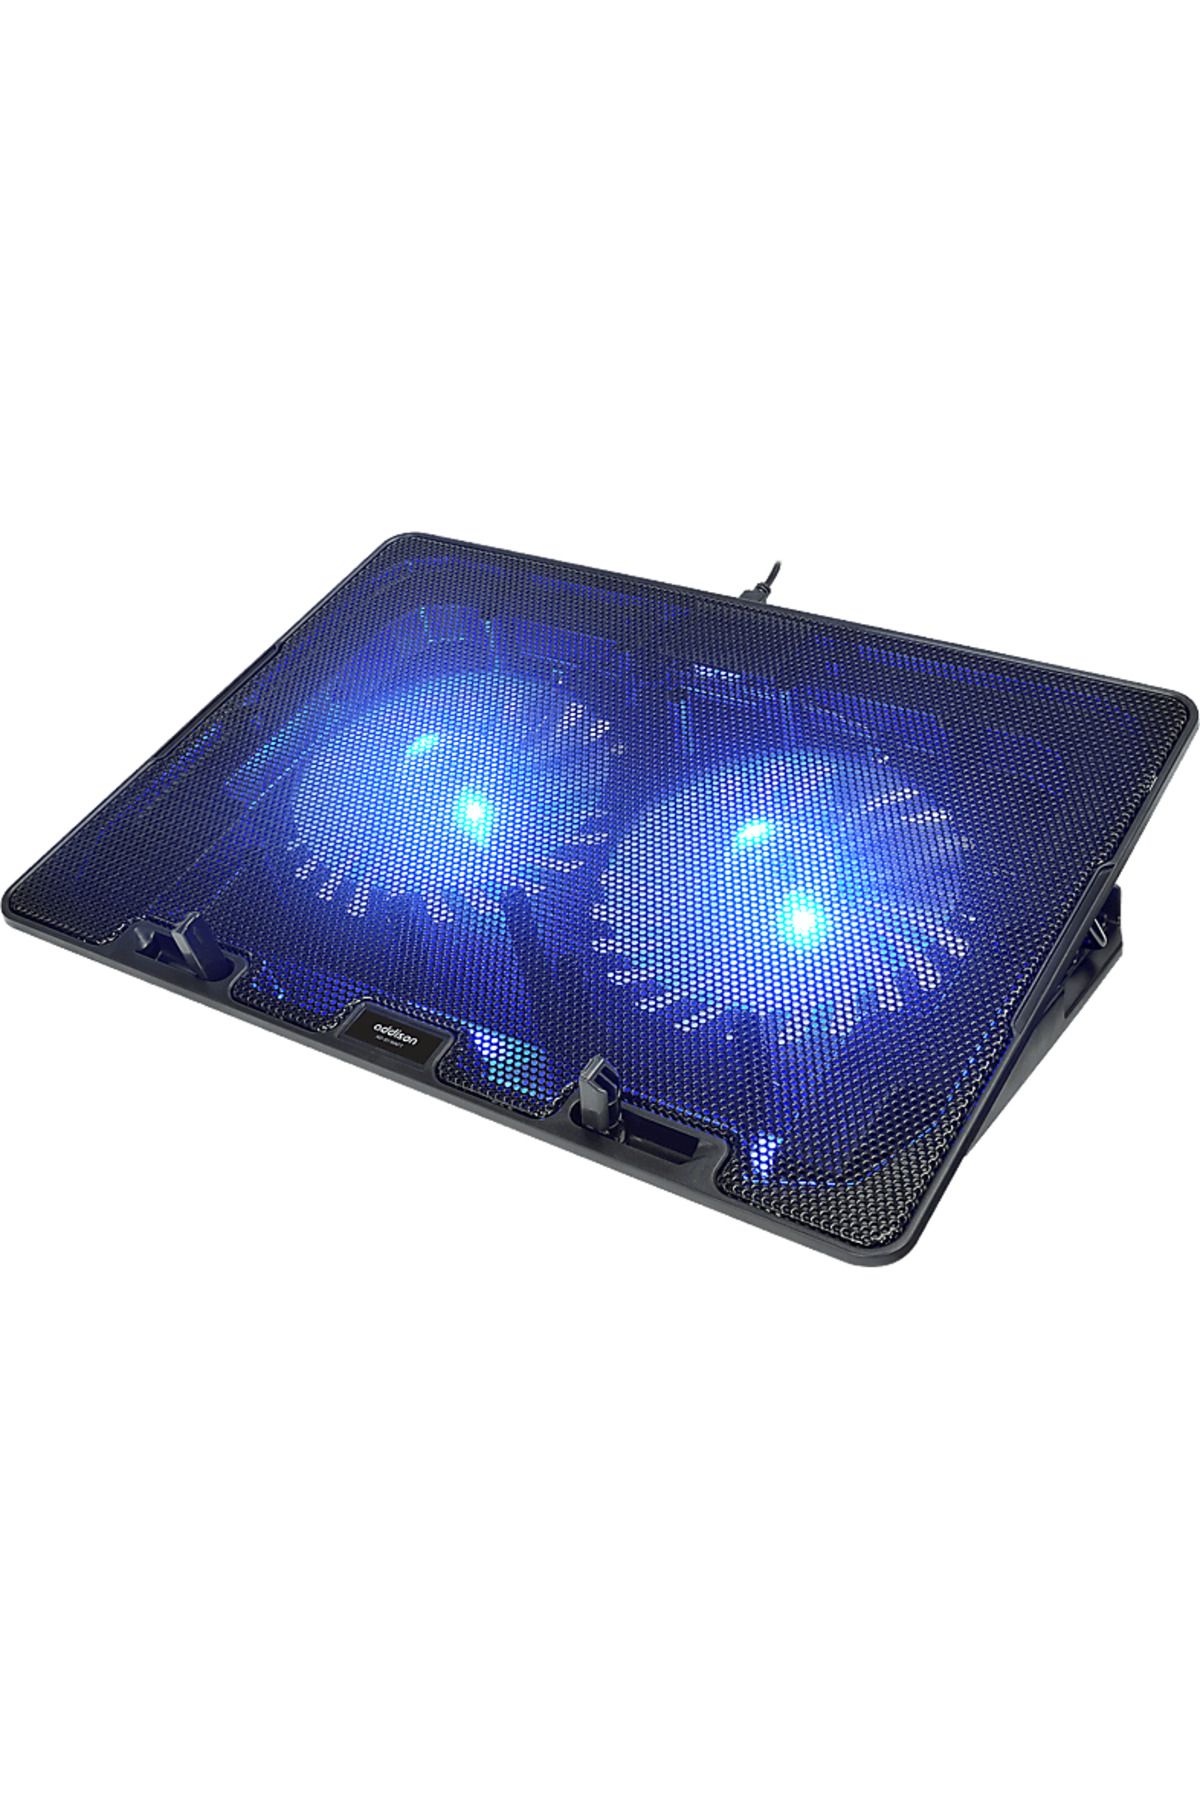 Addison AD-S1 Waft Mavi Led Işıklı 2 Fanlı 2 Usb Dc 5V Laptop Soğutucu Stand Siyah